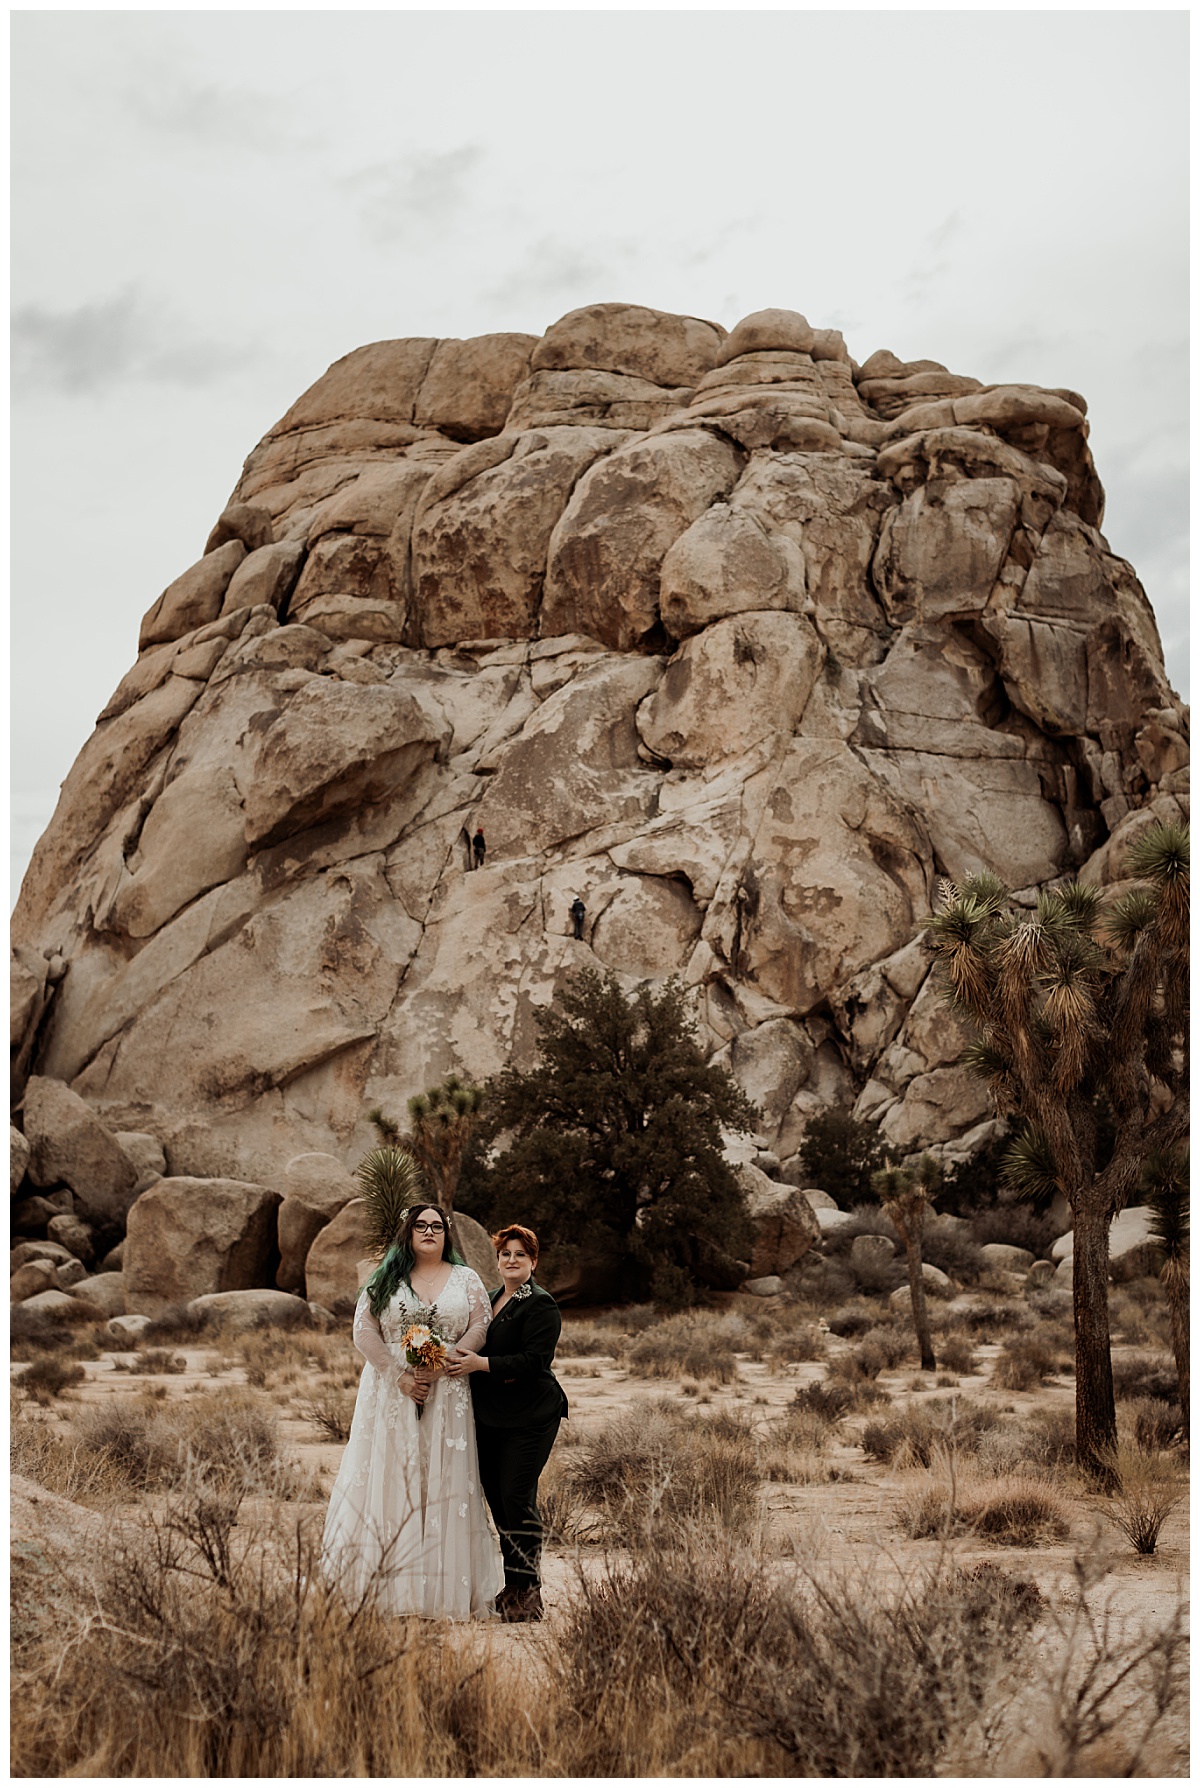 two women stand together in desert in formal attire by Brea Warren Photo